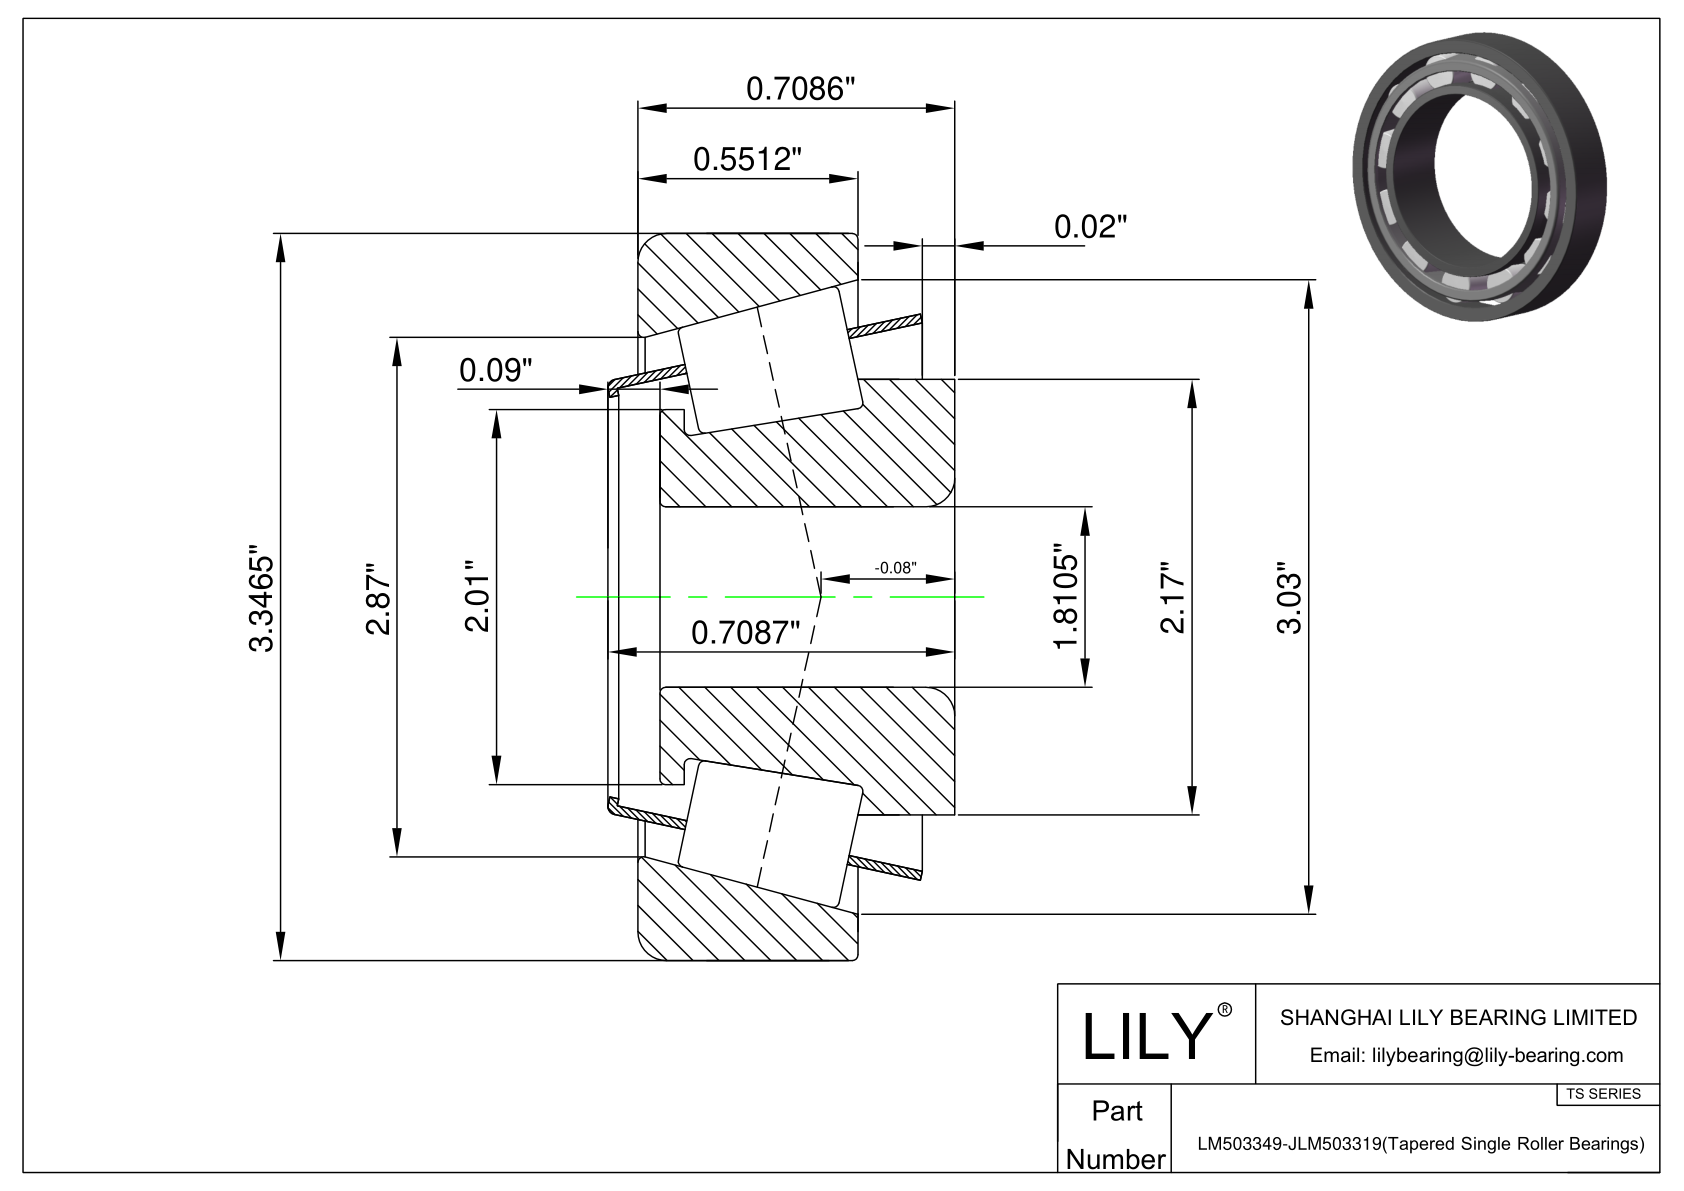 LM503349-JLM503319 TS系列(圆锥单滚子轴承)(英制) CAD图形